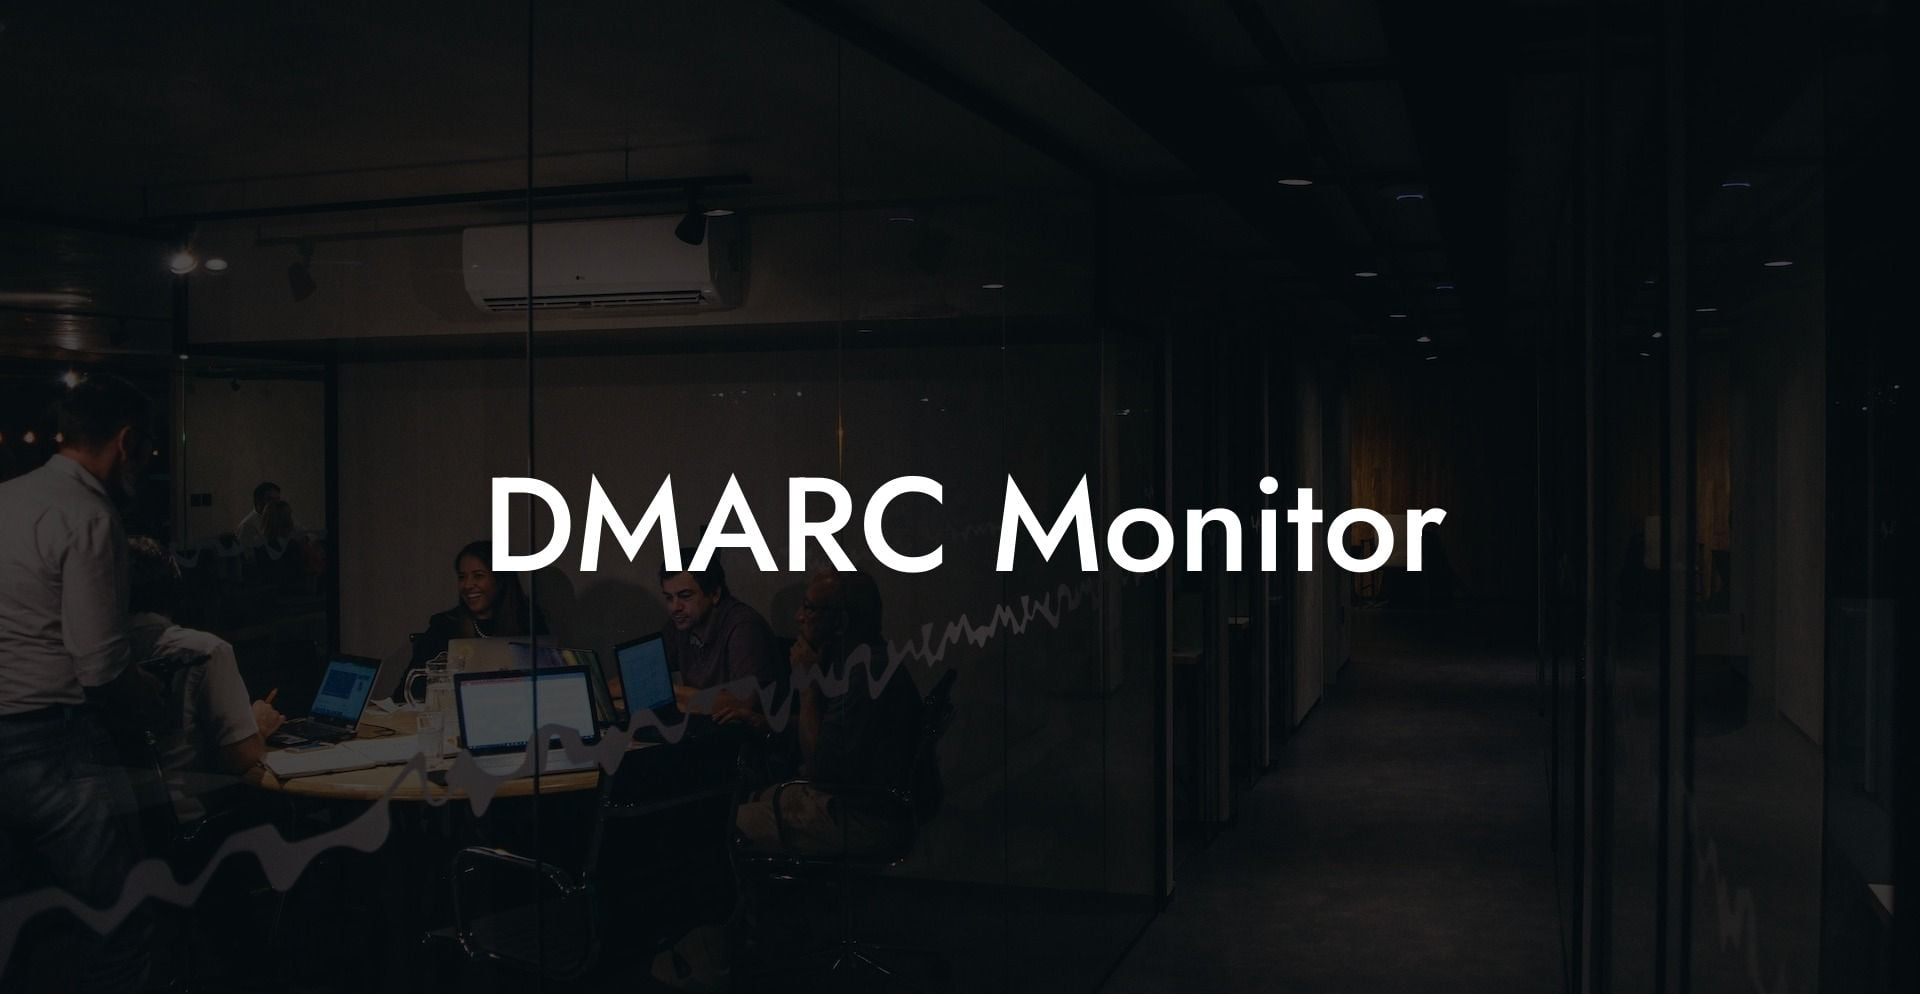 DMARC Monitor